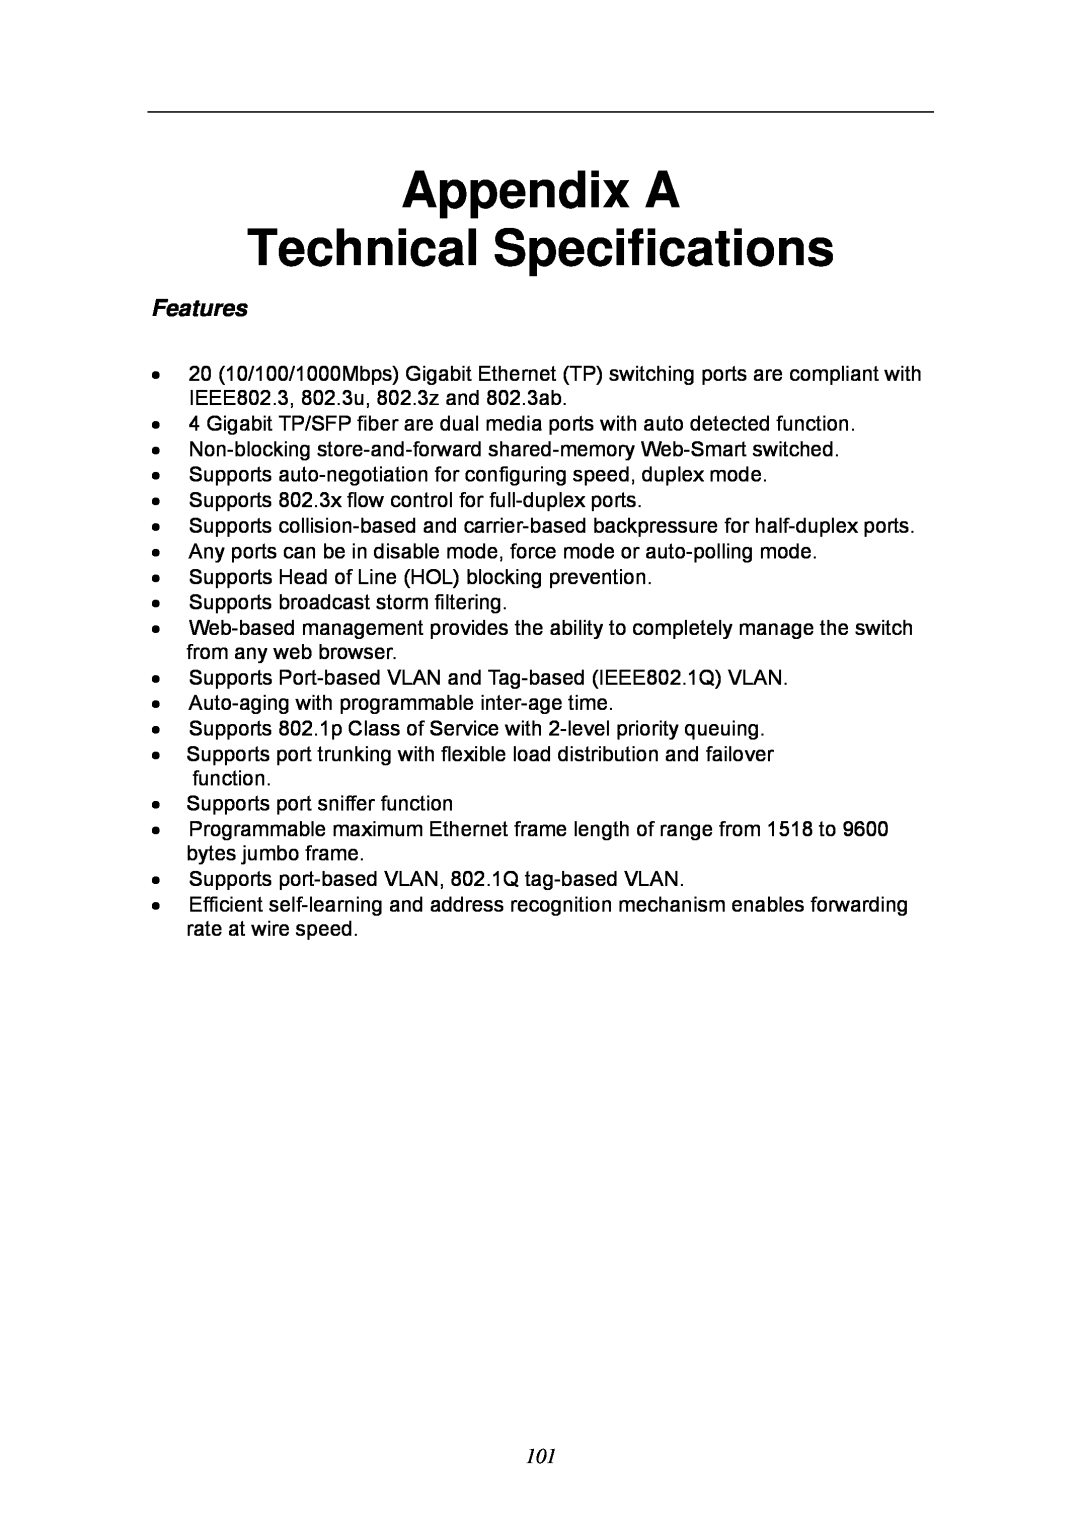 KTI Networks KGS-2404 manual Appendix A Technical Specifications, Features 